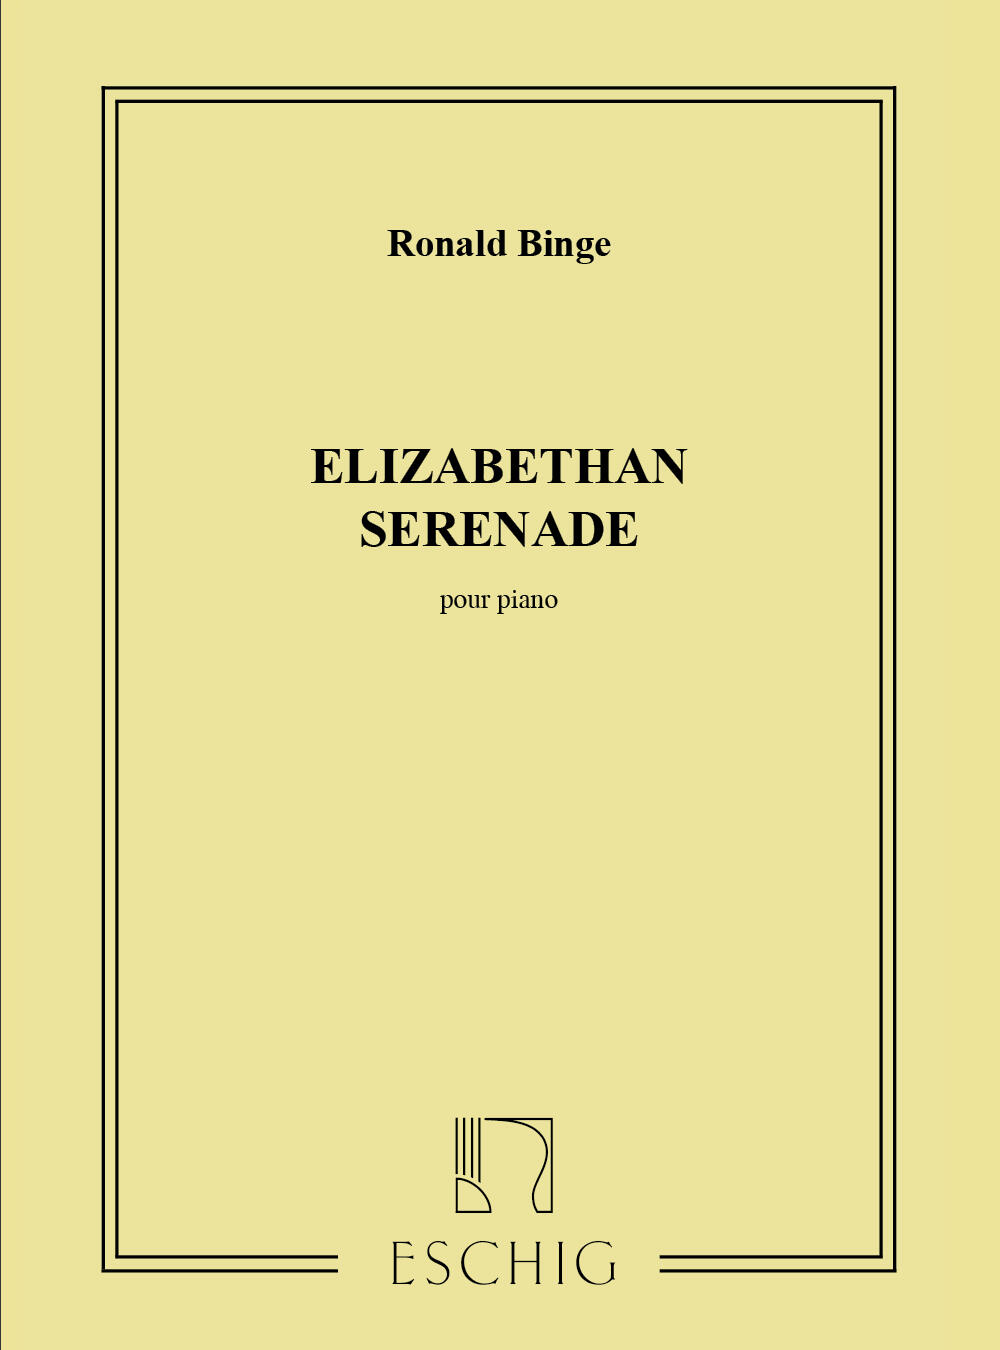 Max Elizabeth Serenade  Pour Piano Roland Binge  Klavier Partitur  ME 7054 : photo 1